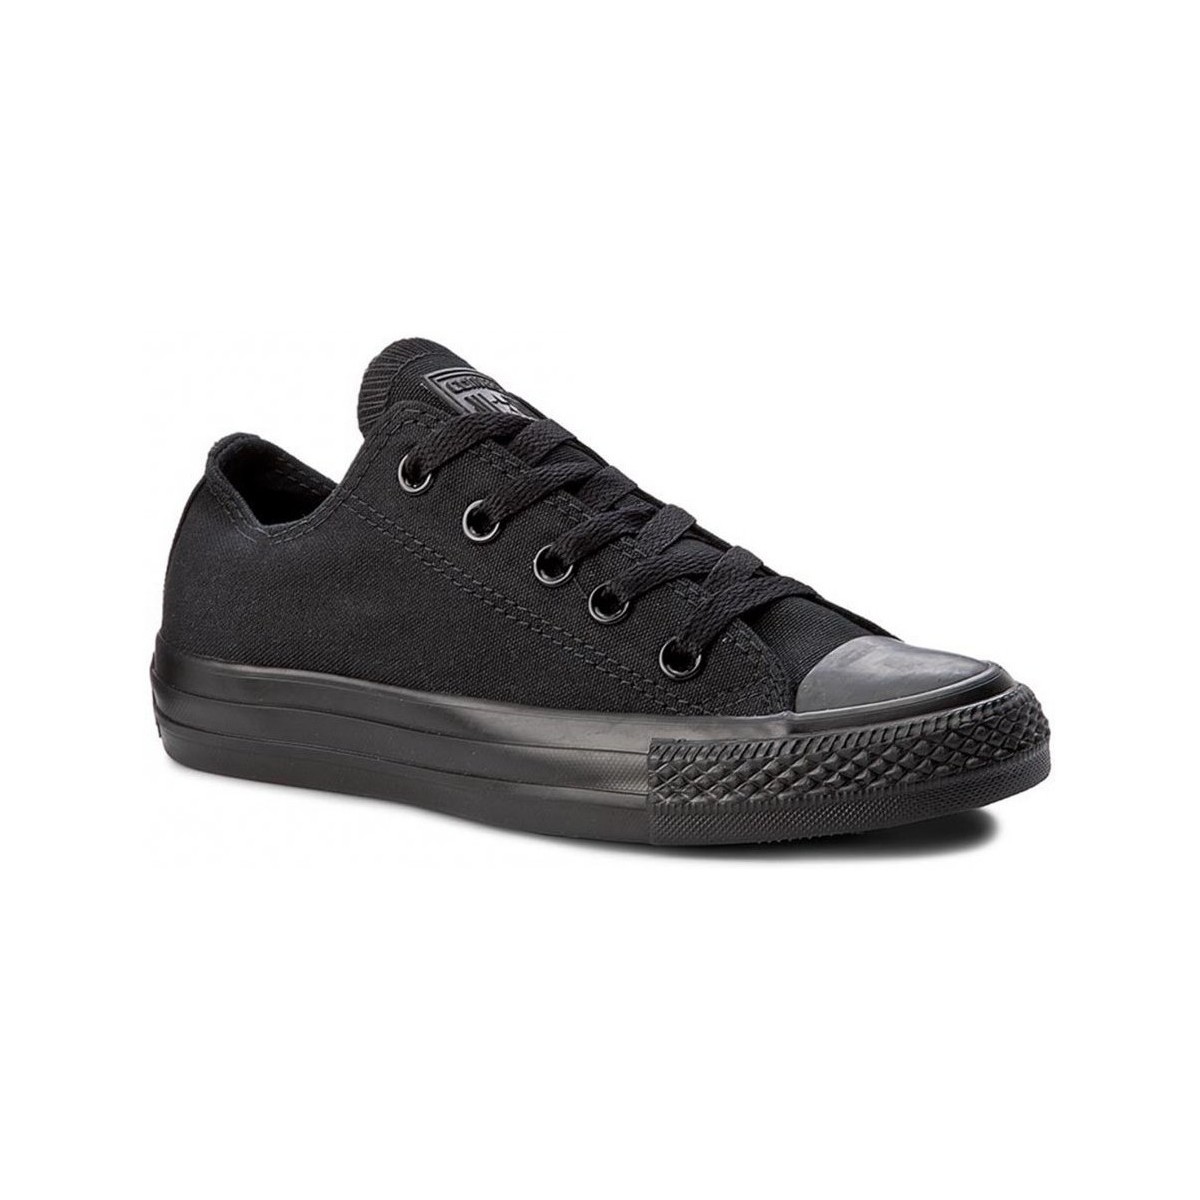 Schuhe Damen Sneaker Converse M5039 Schwarz